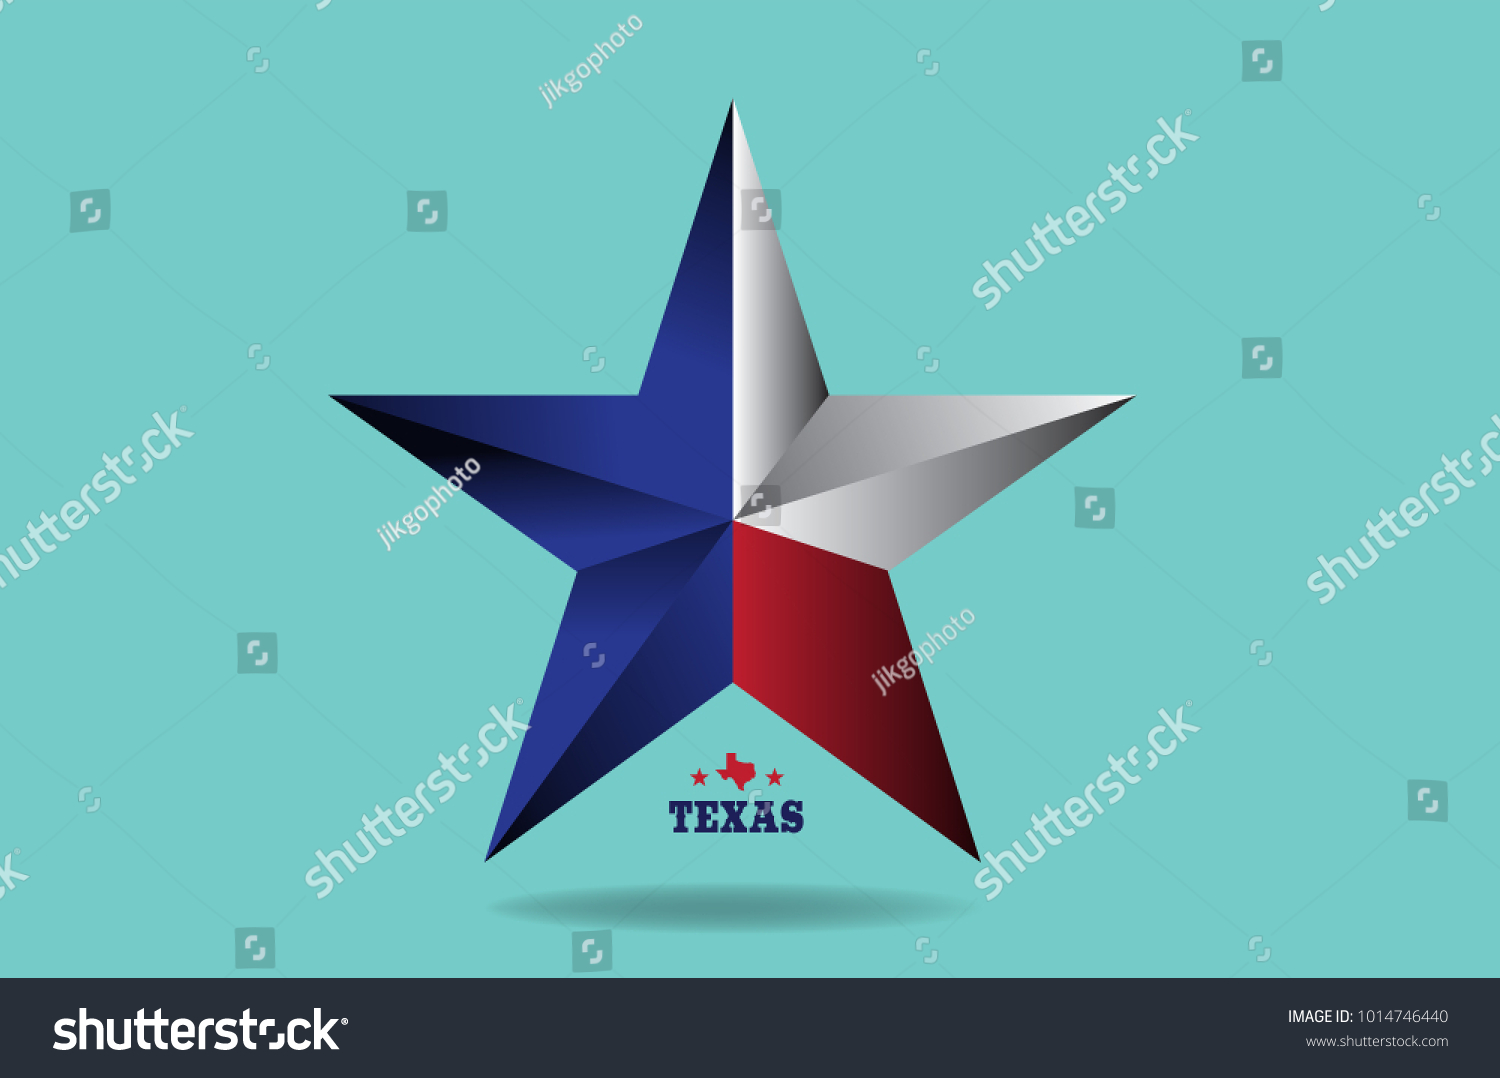 Texas star logo Images, Stock Photos & Vectors Shutterstock